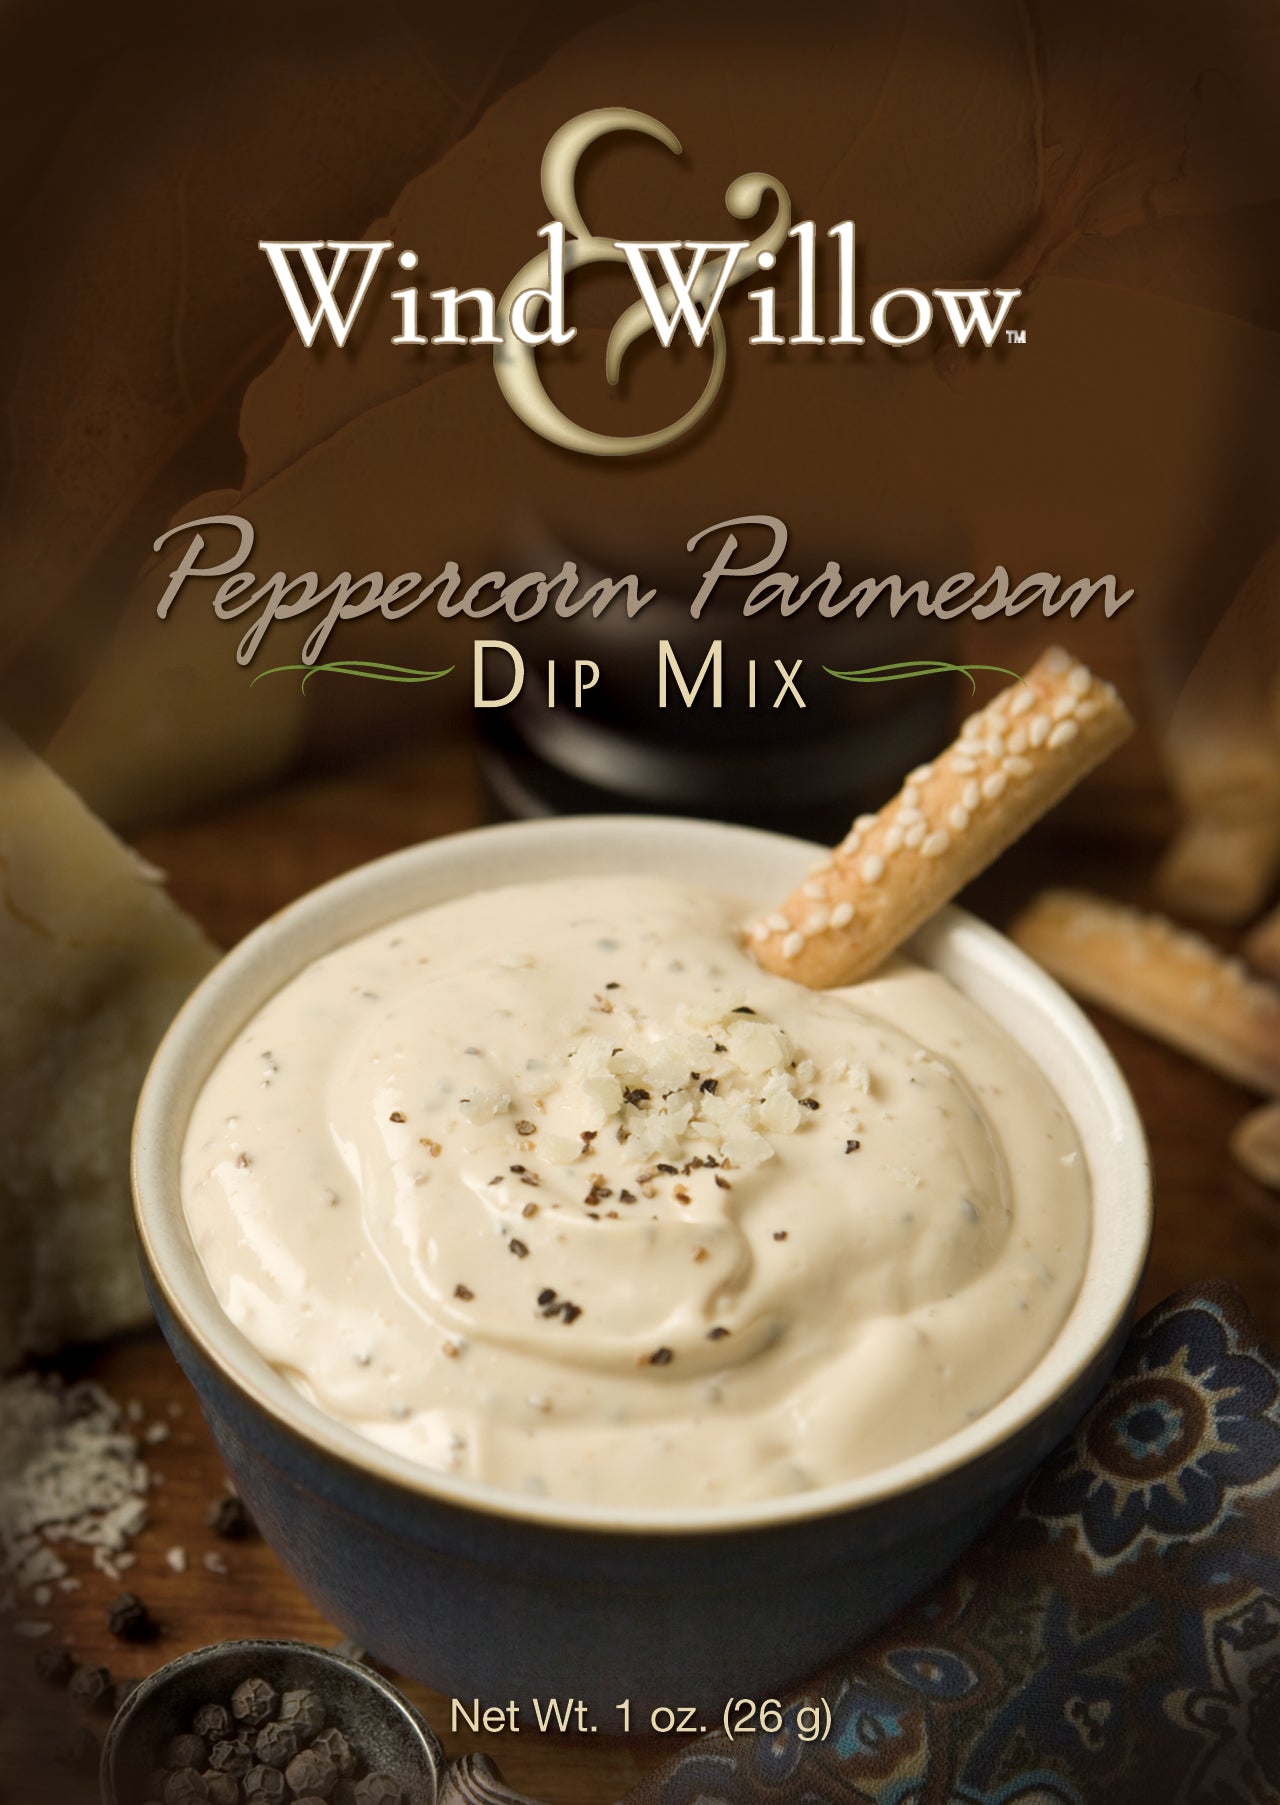 Peppercorn Parmesan, Dip Mix